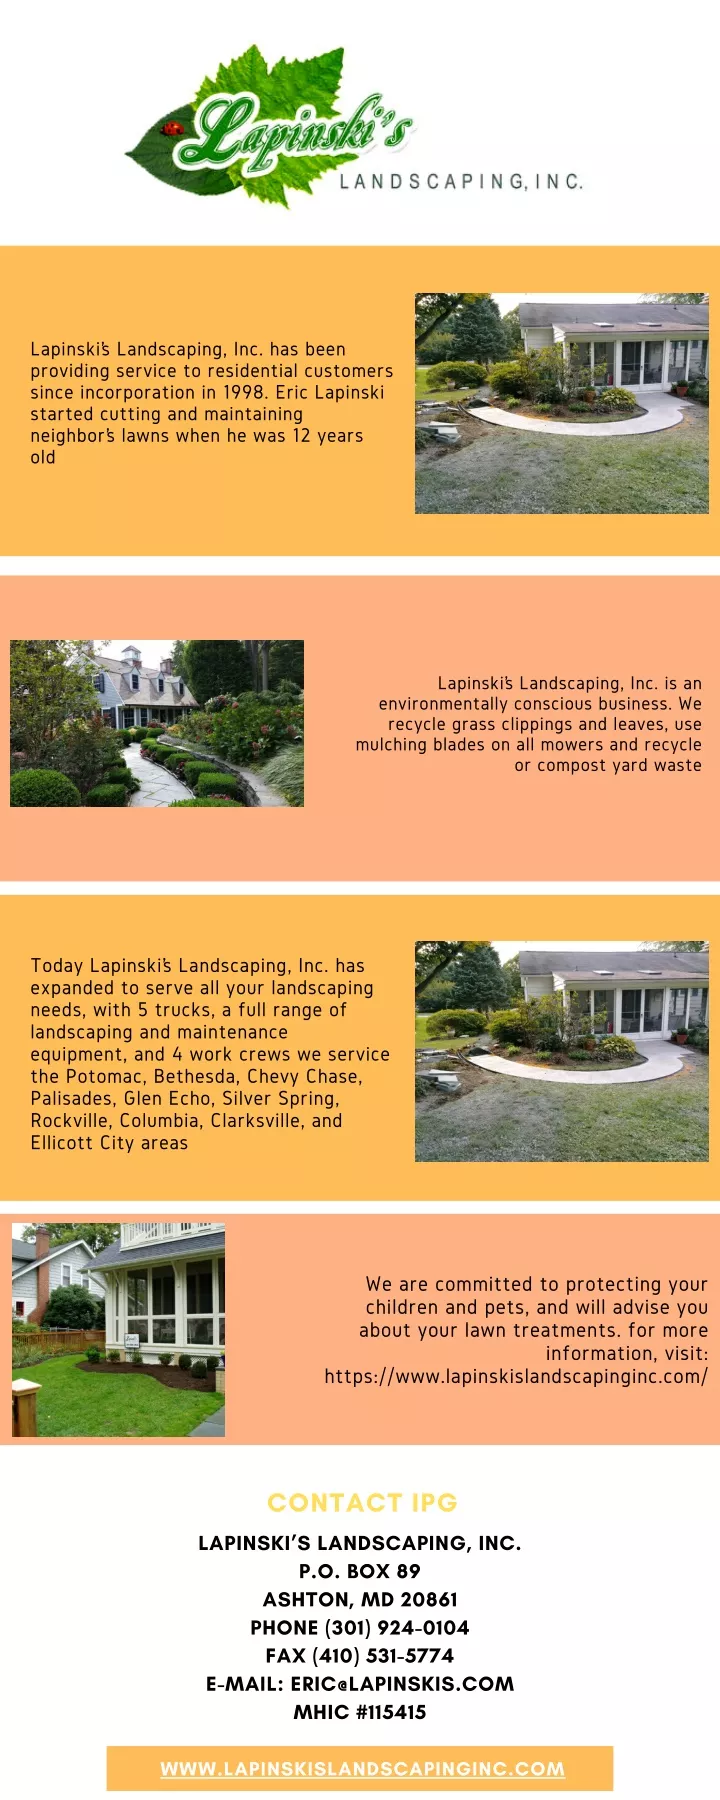 lapinski s landscaping inc has been providing